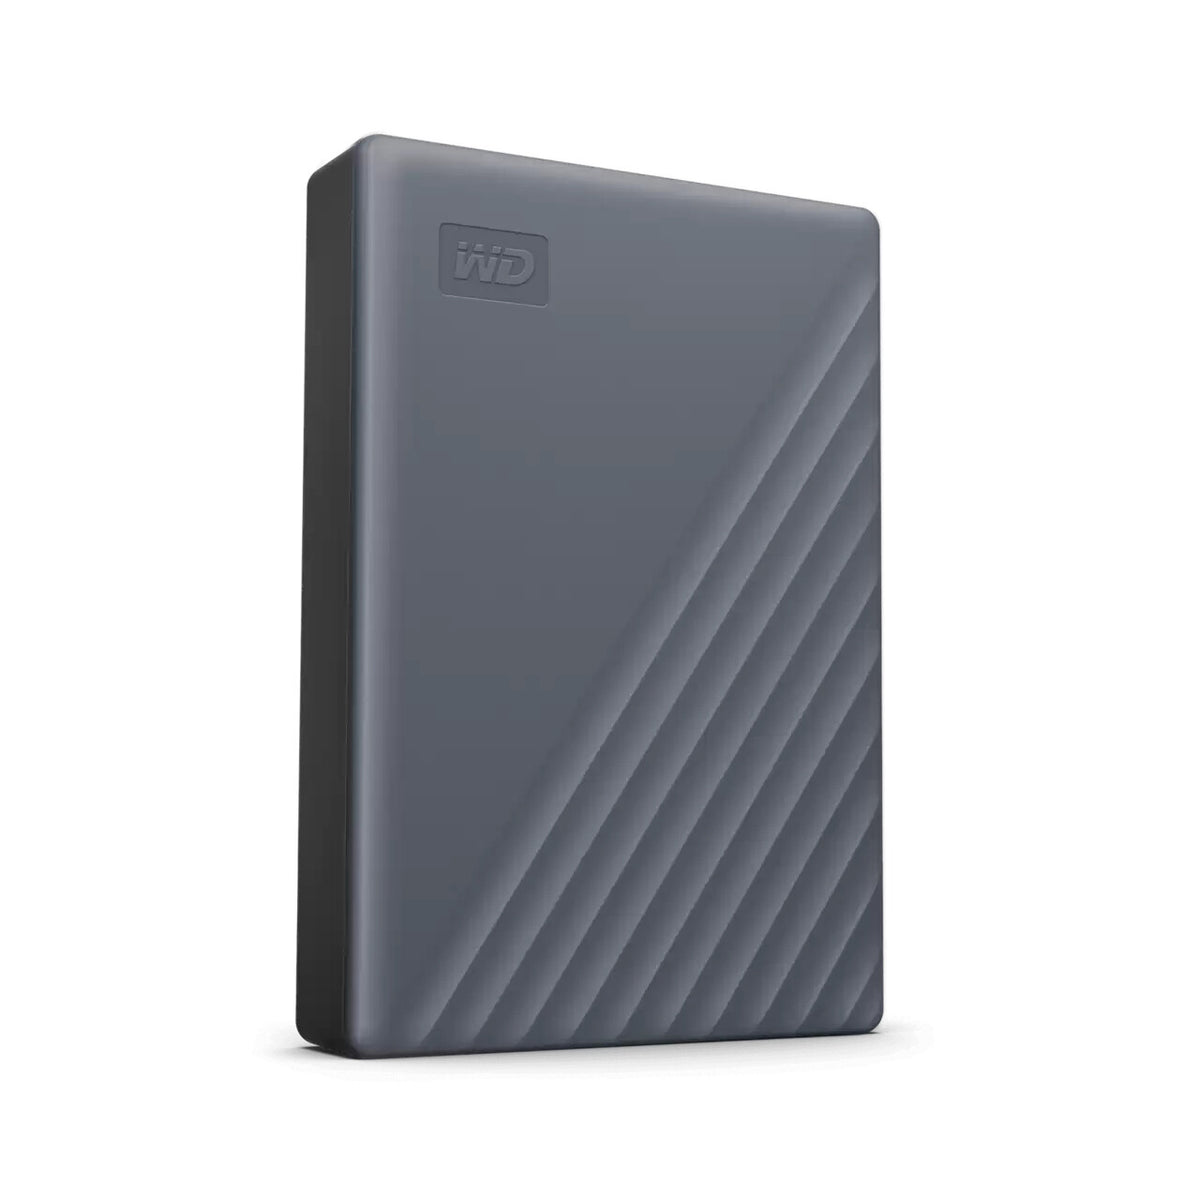 Western Digital My Passport - External Hard Drive in Black - 5 TB